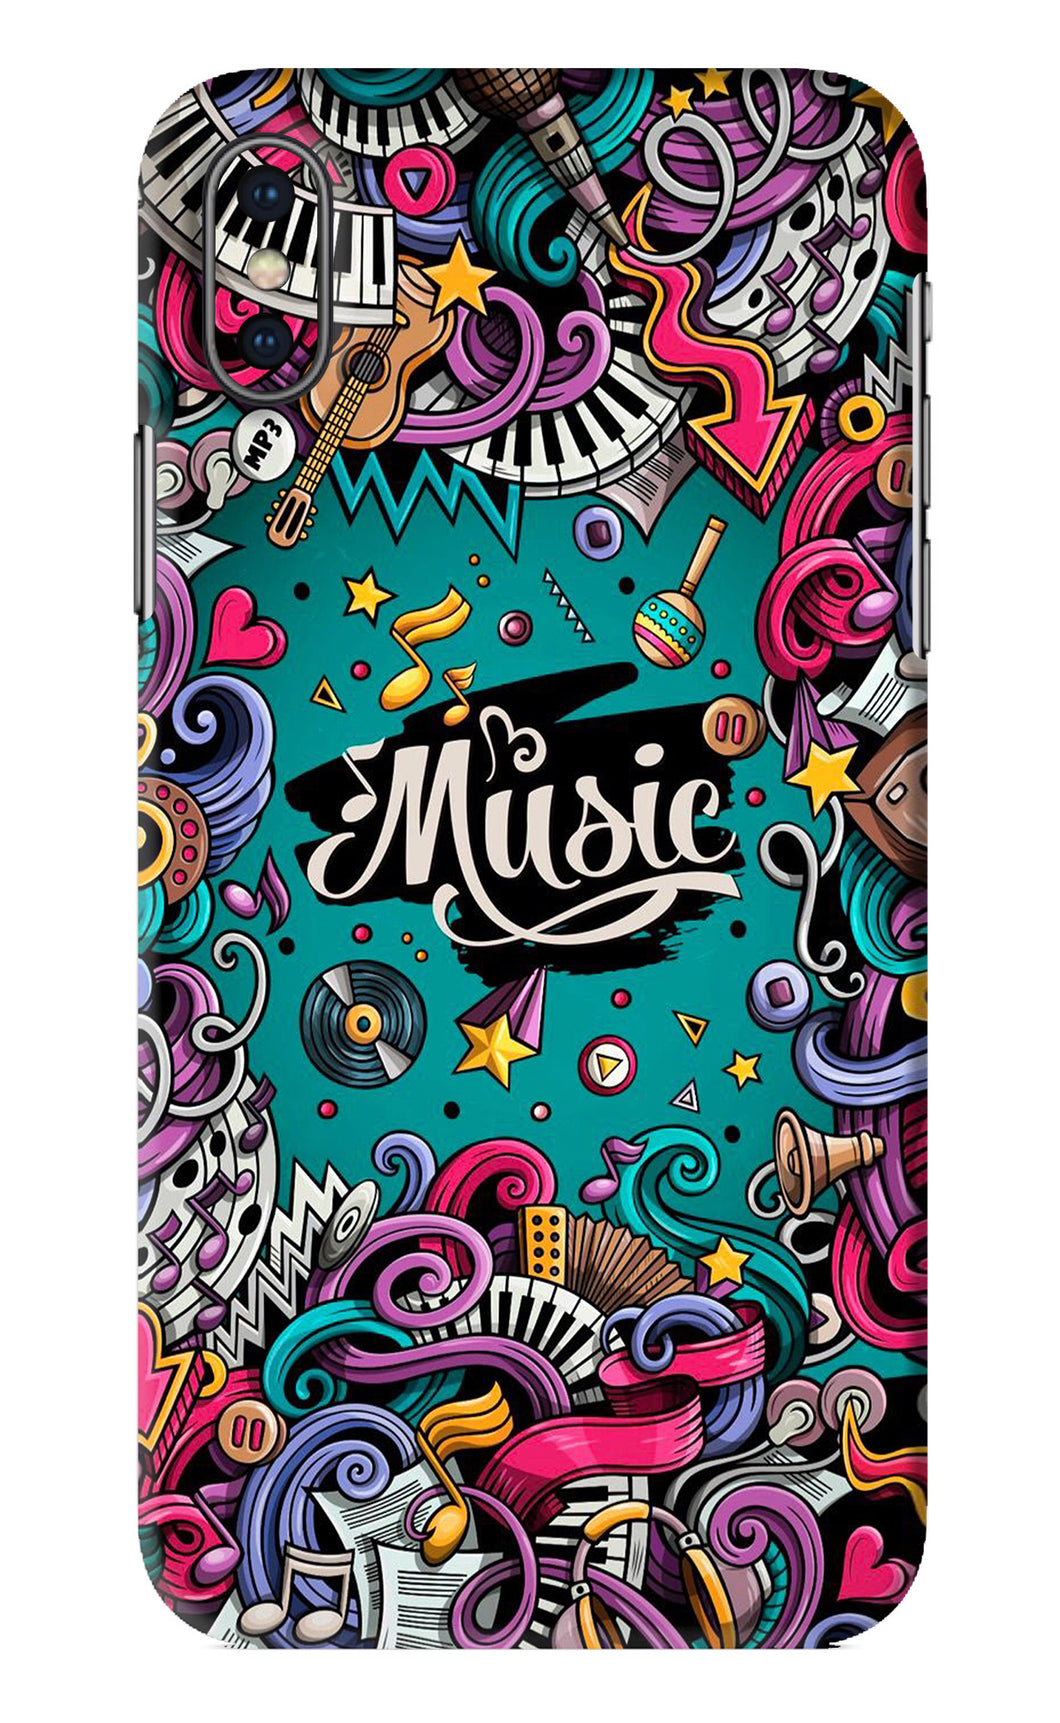 Music Graffiti iPhone X Back Skin Wrap